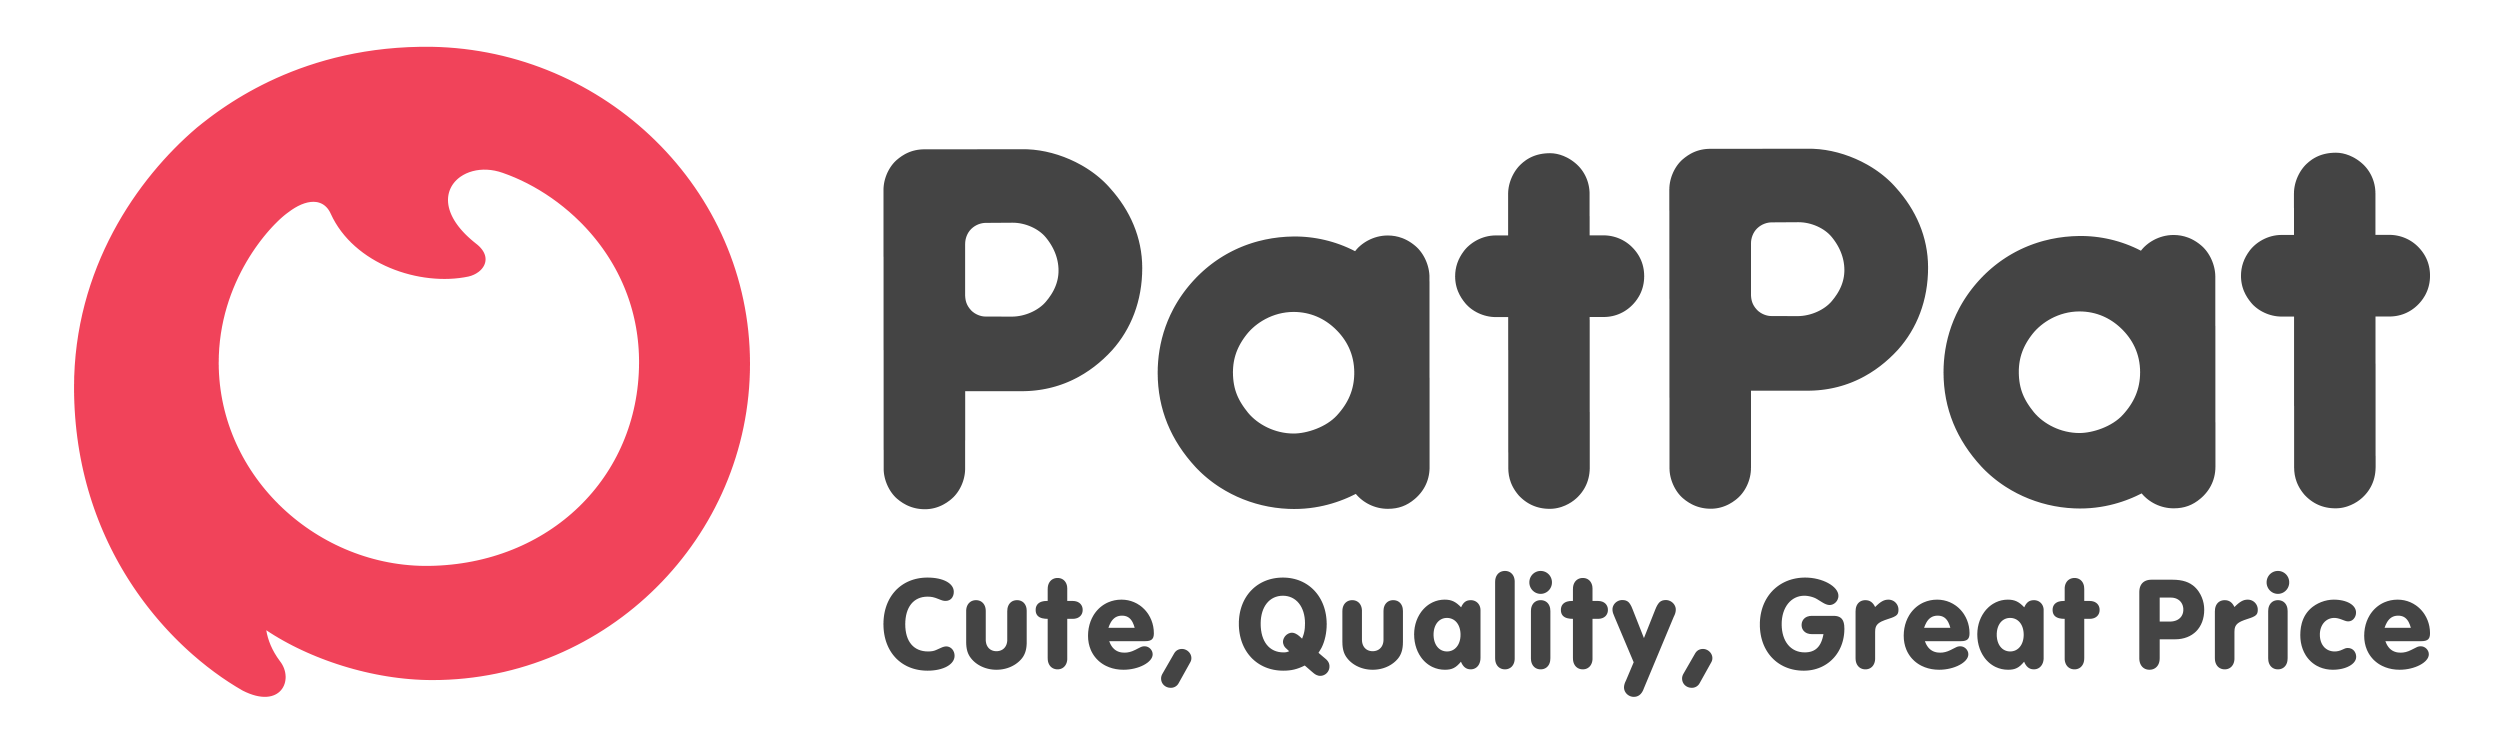 PatPat Logo 8 1.png